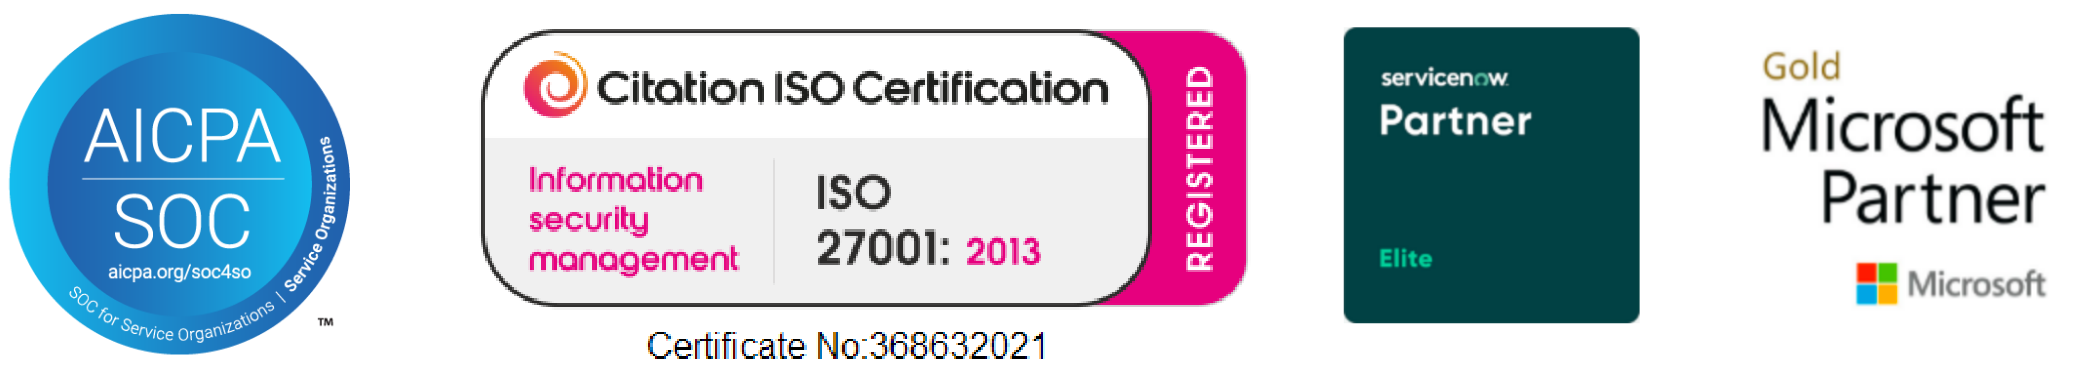 SOC 2 compliant | ISO 27001 certified | ServiceNow Elite Partner | Gold Microsoft Partner